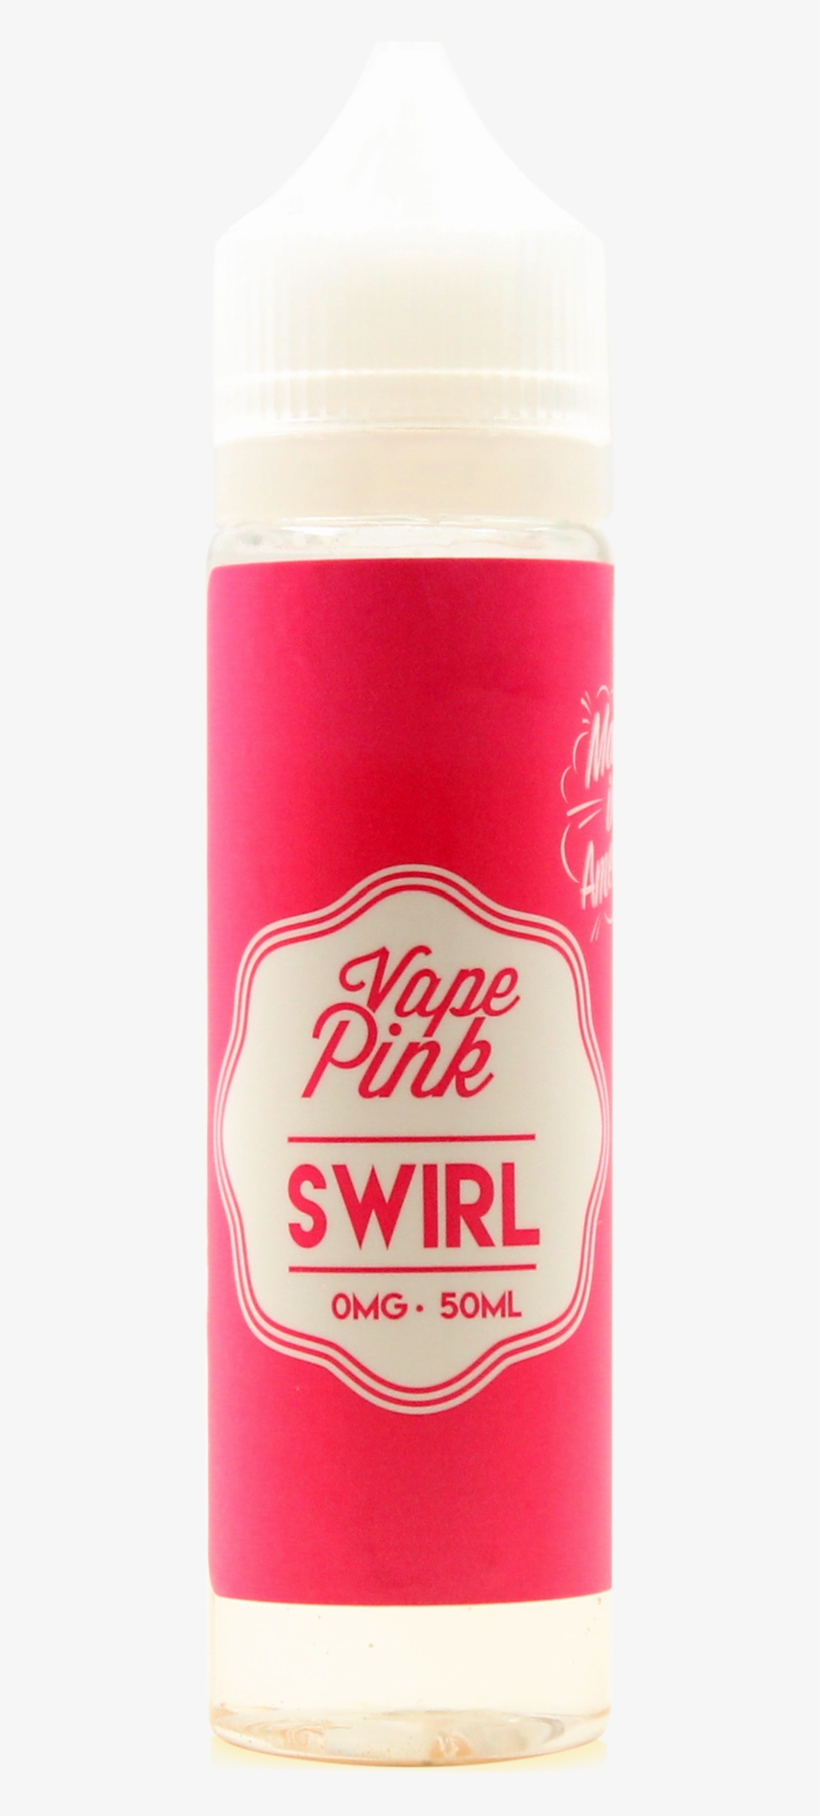 Vape Pink - Swirl - 50ml Shortfill - Zero Nicotine - Plastic Bottle, transparent png #2995504